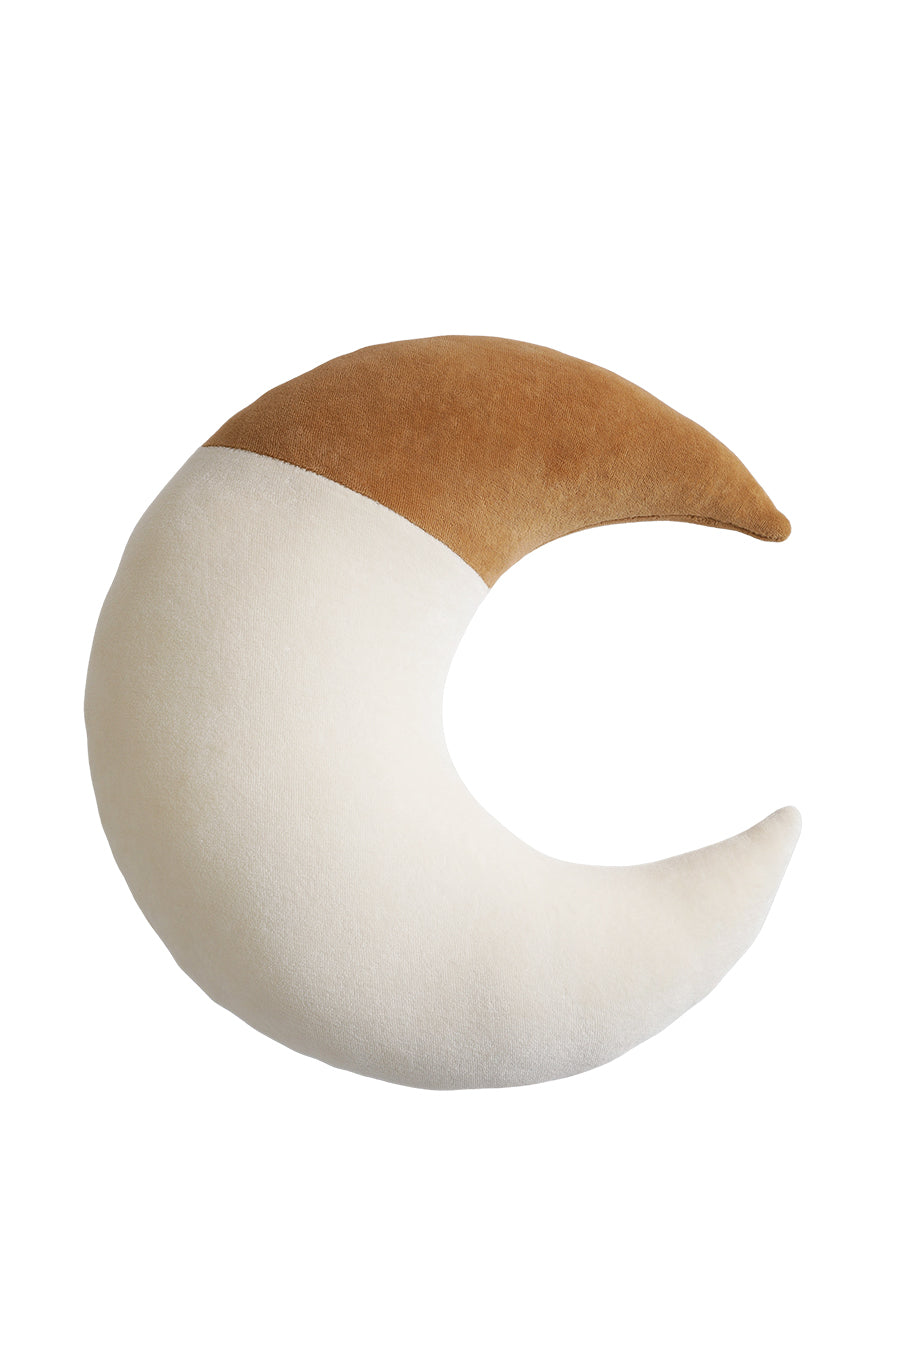 Caramel Moon Cushion